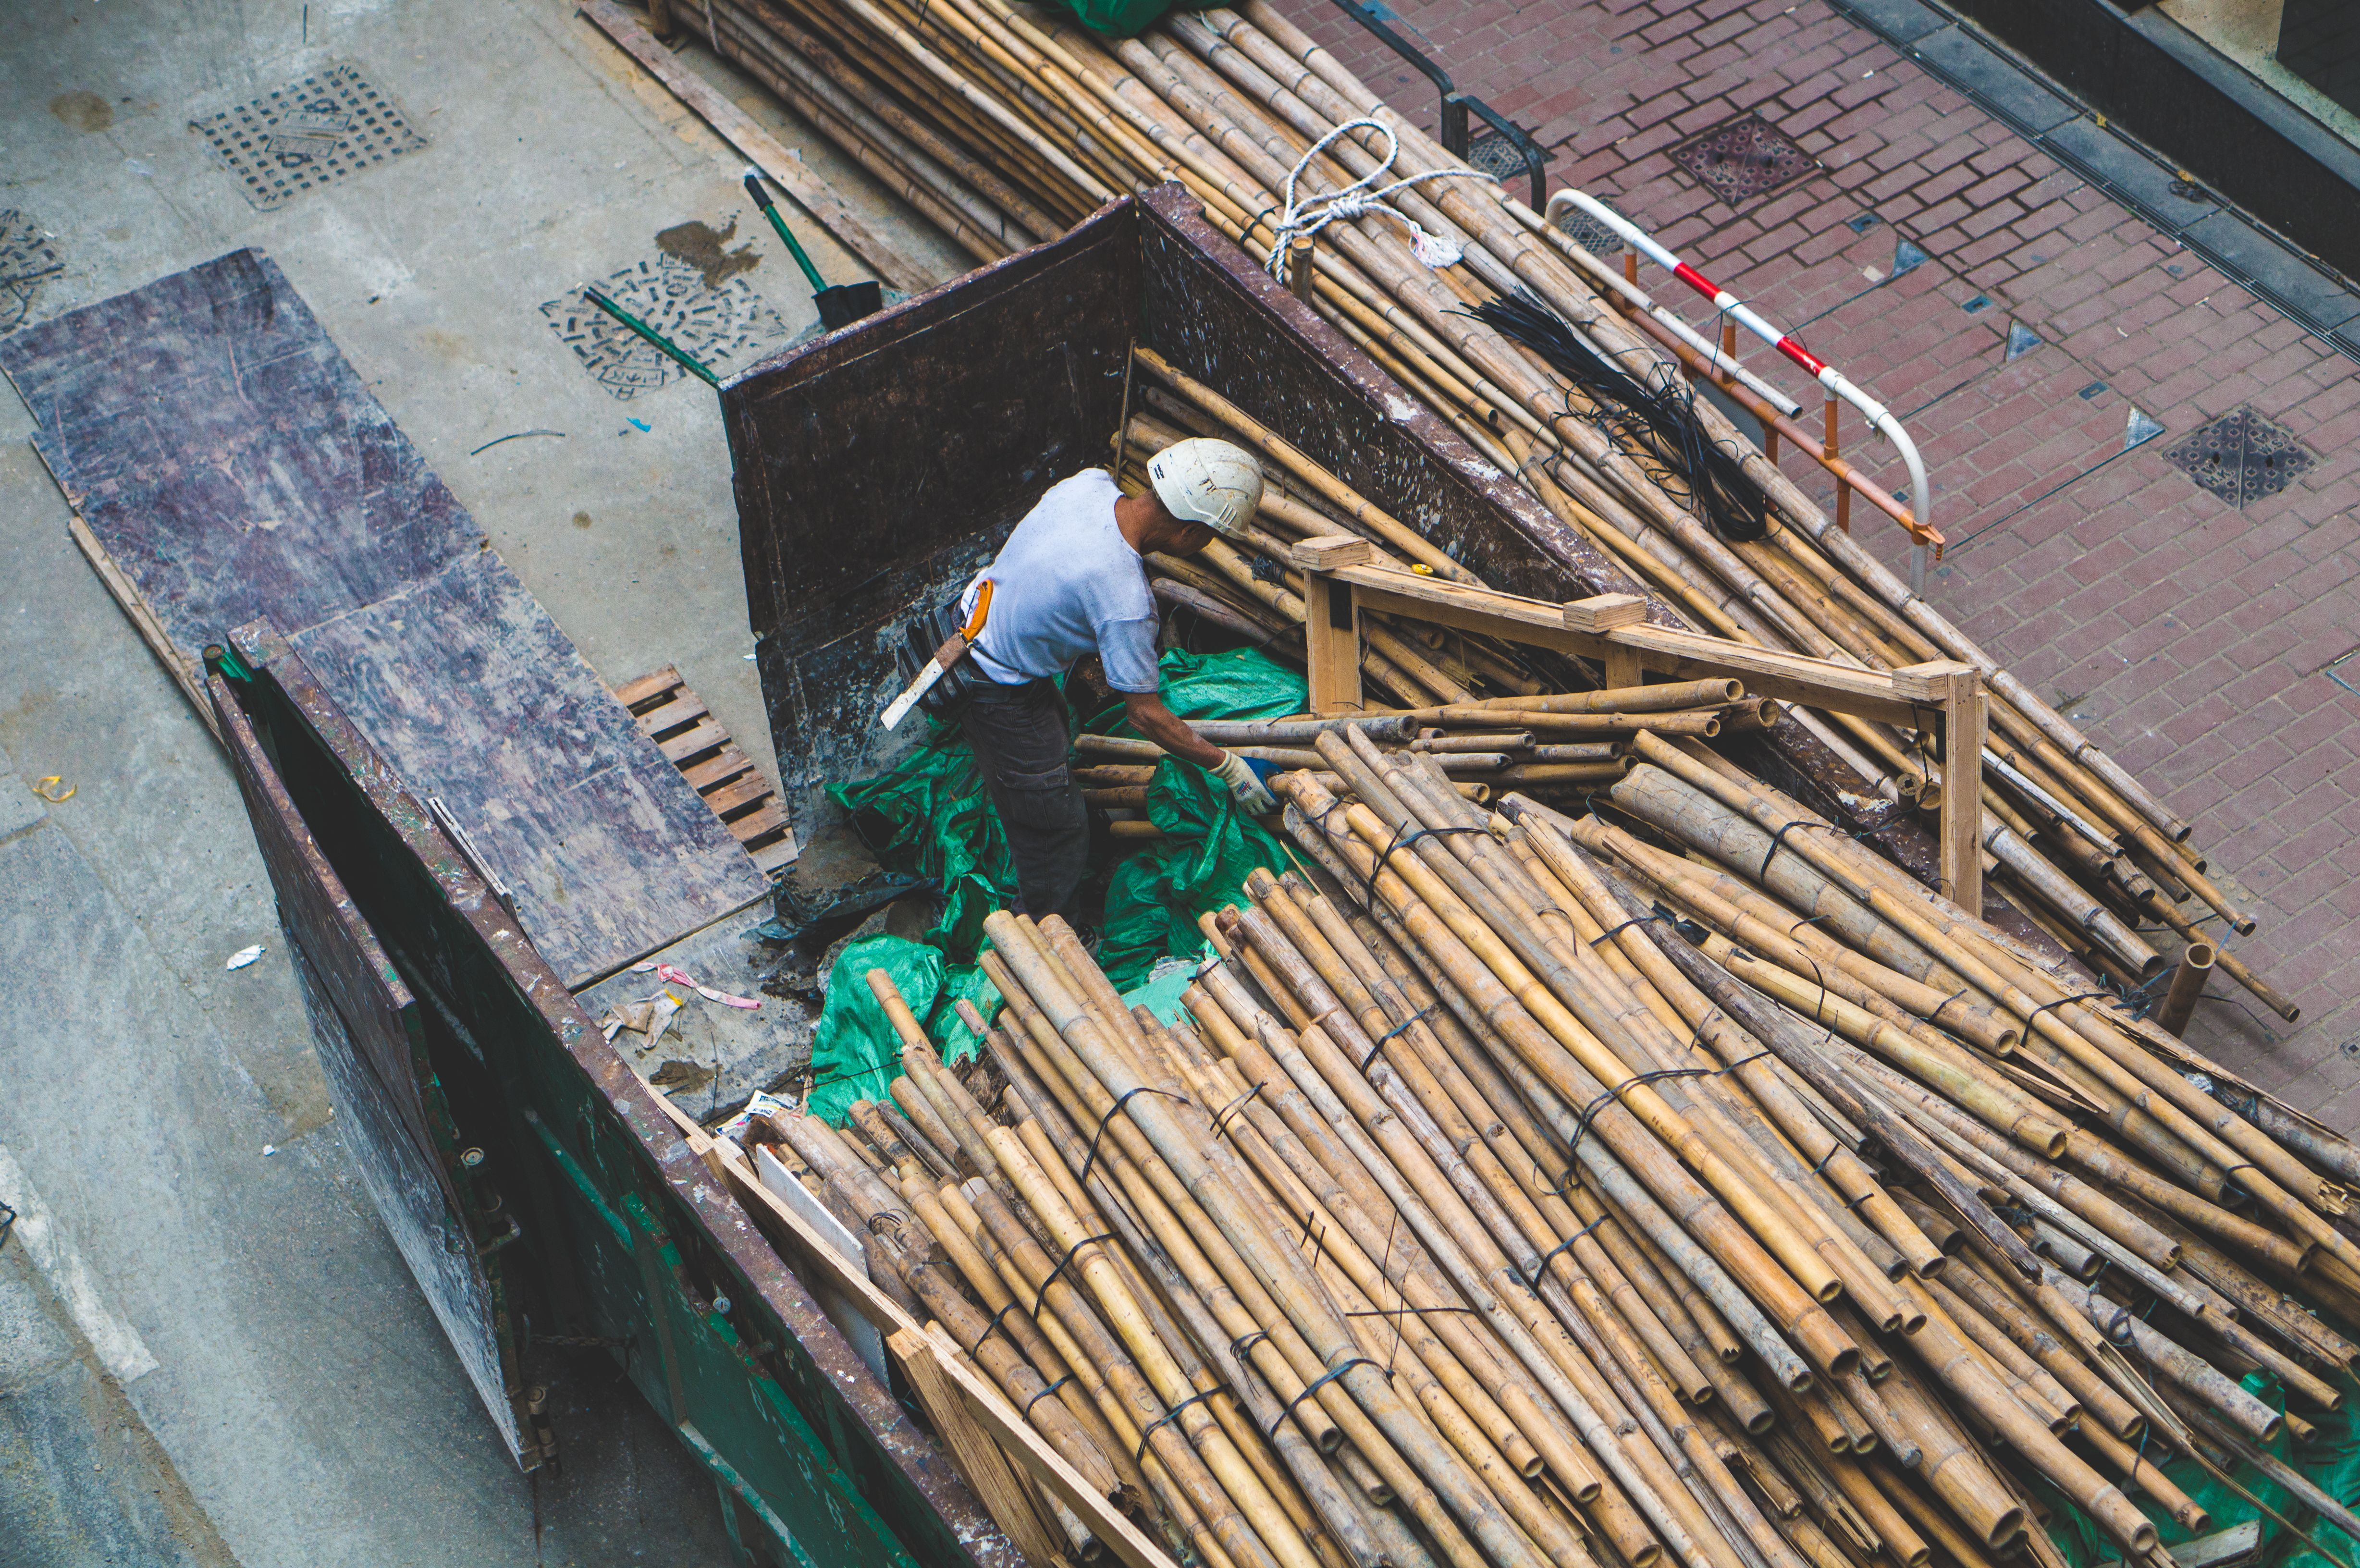 bambooscaffoldingsteemit.jpg